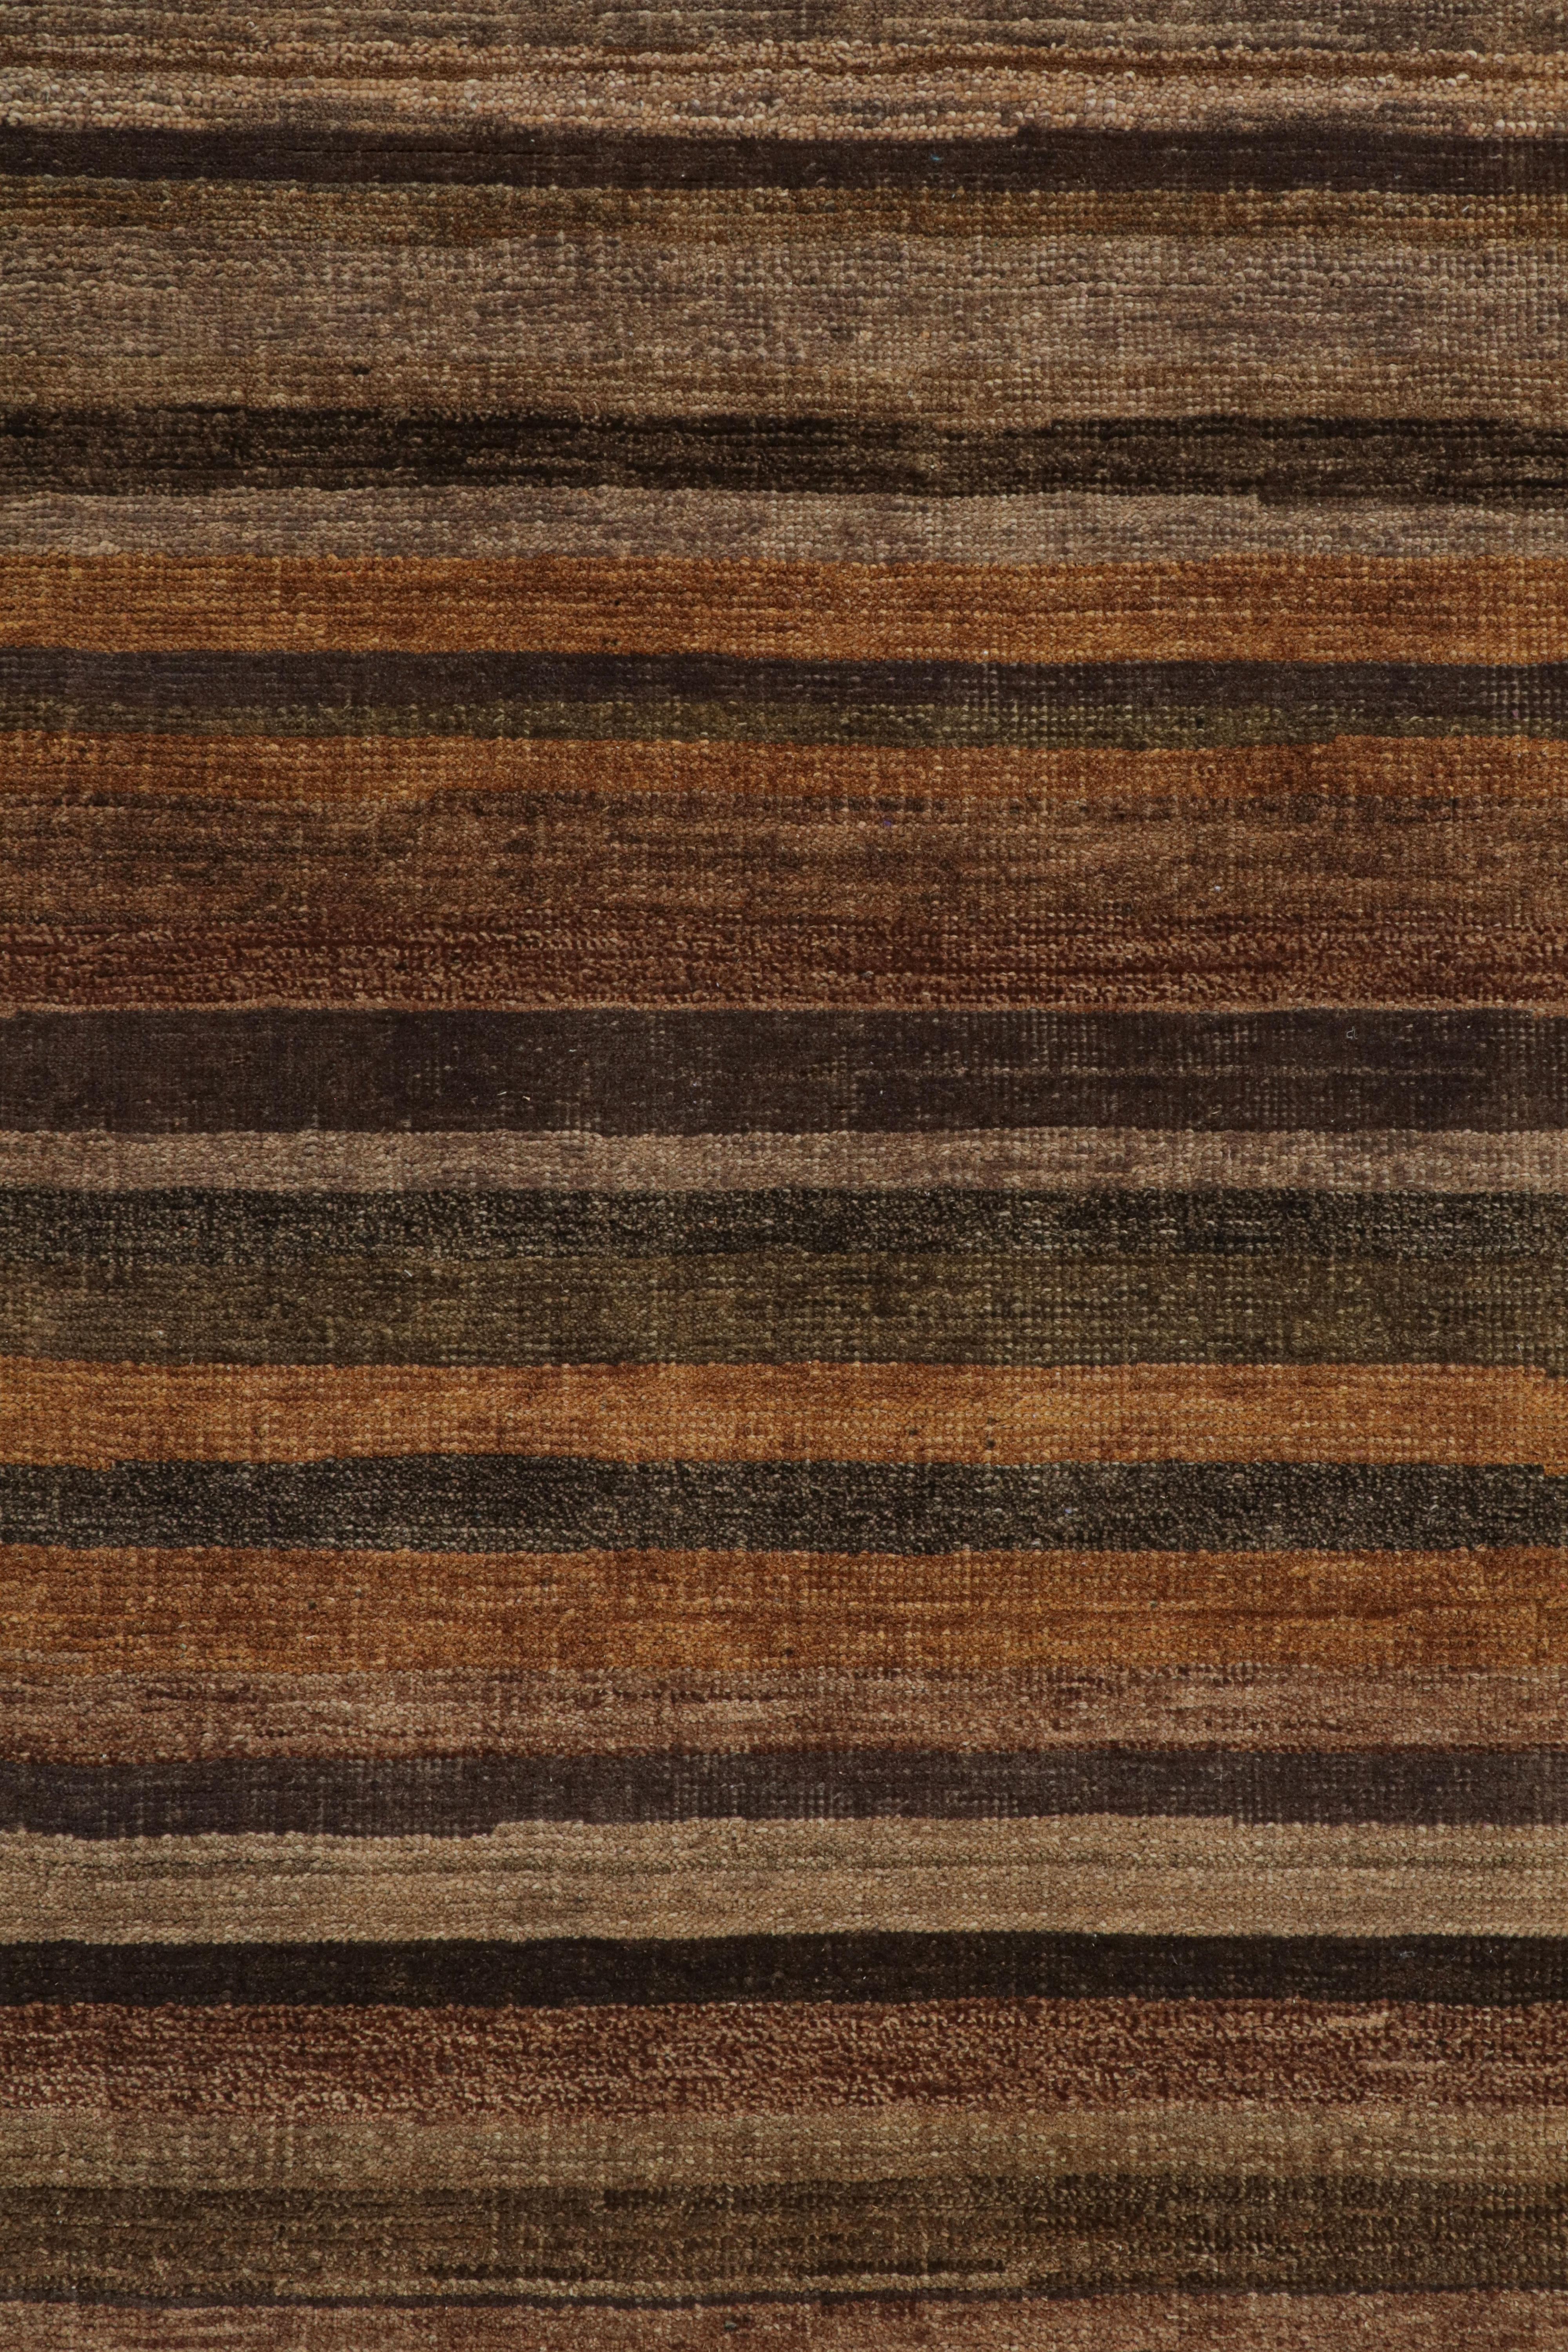 Moderne Rug & Kilim's Textural Rug in Beige-Brown Stripes and Striae (tapis texturé à rayures beige et marron) en vente